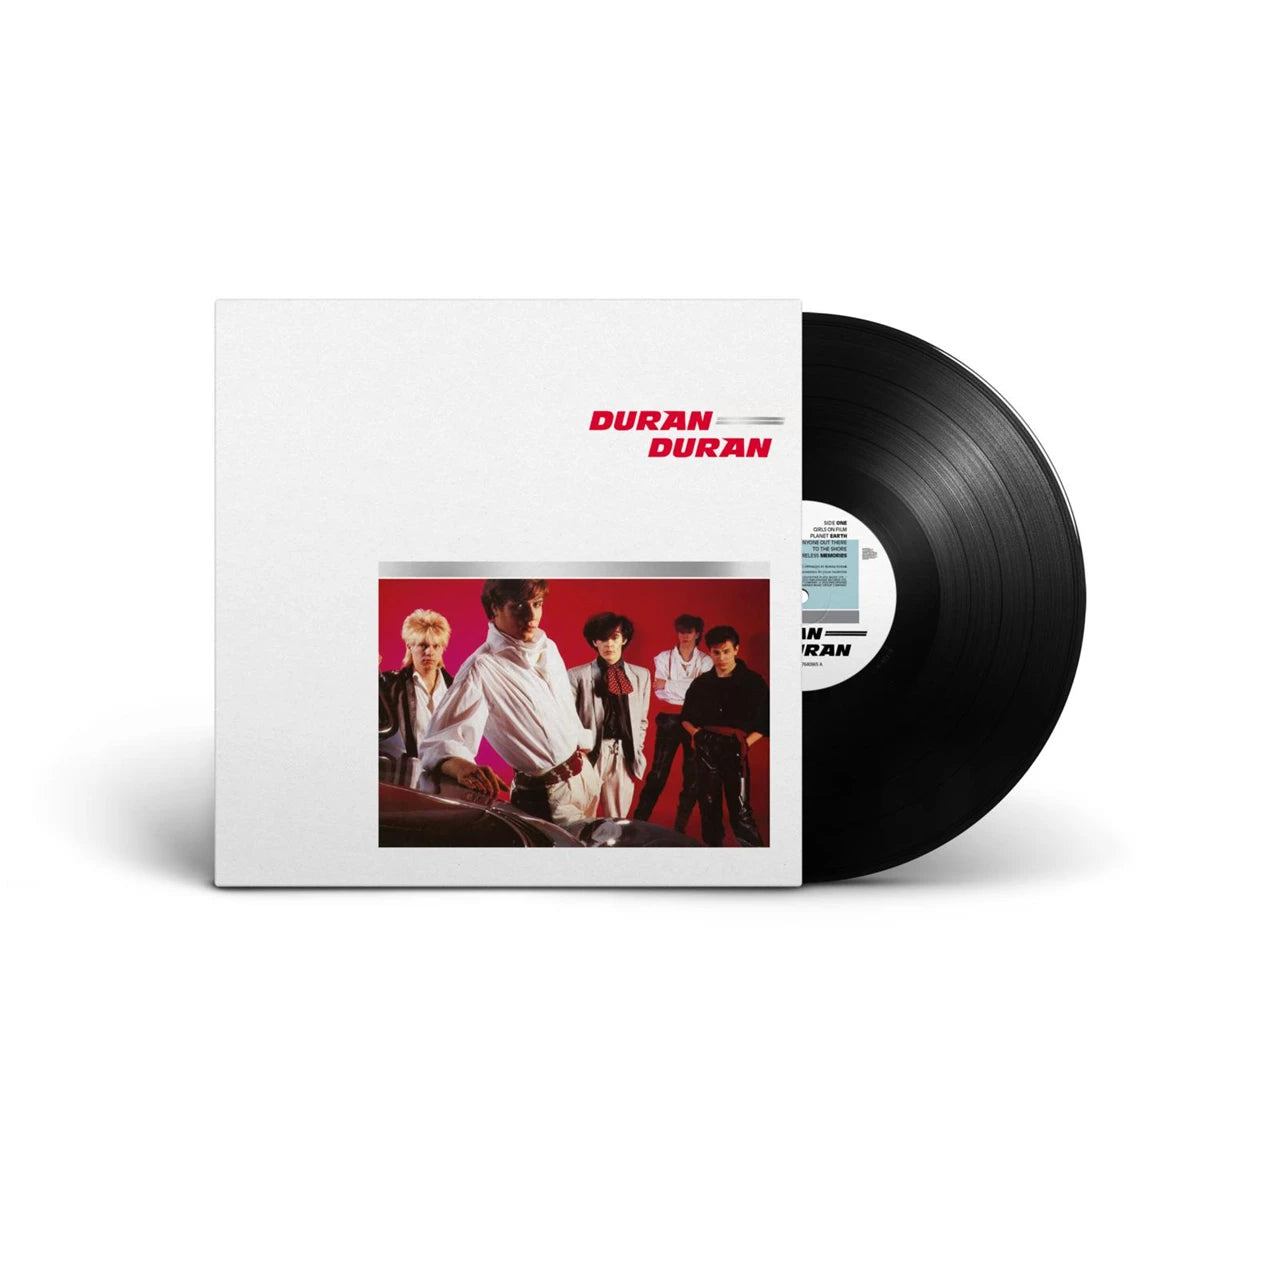 Duran Duran - Duran Duran: Vinyl LP